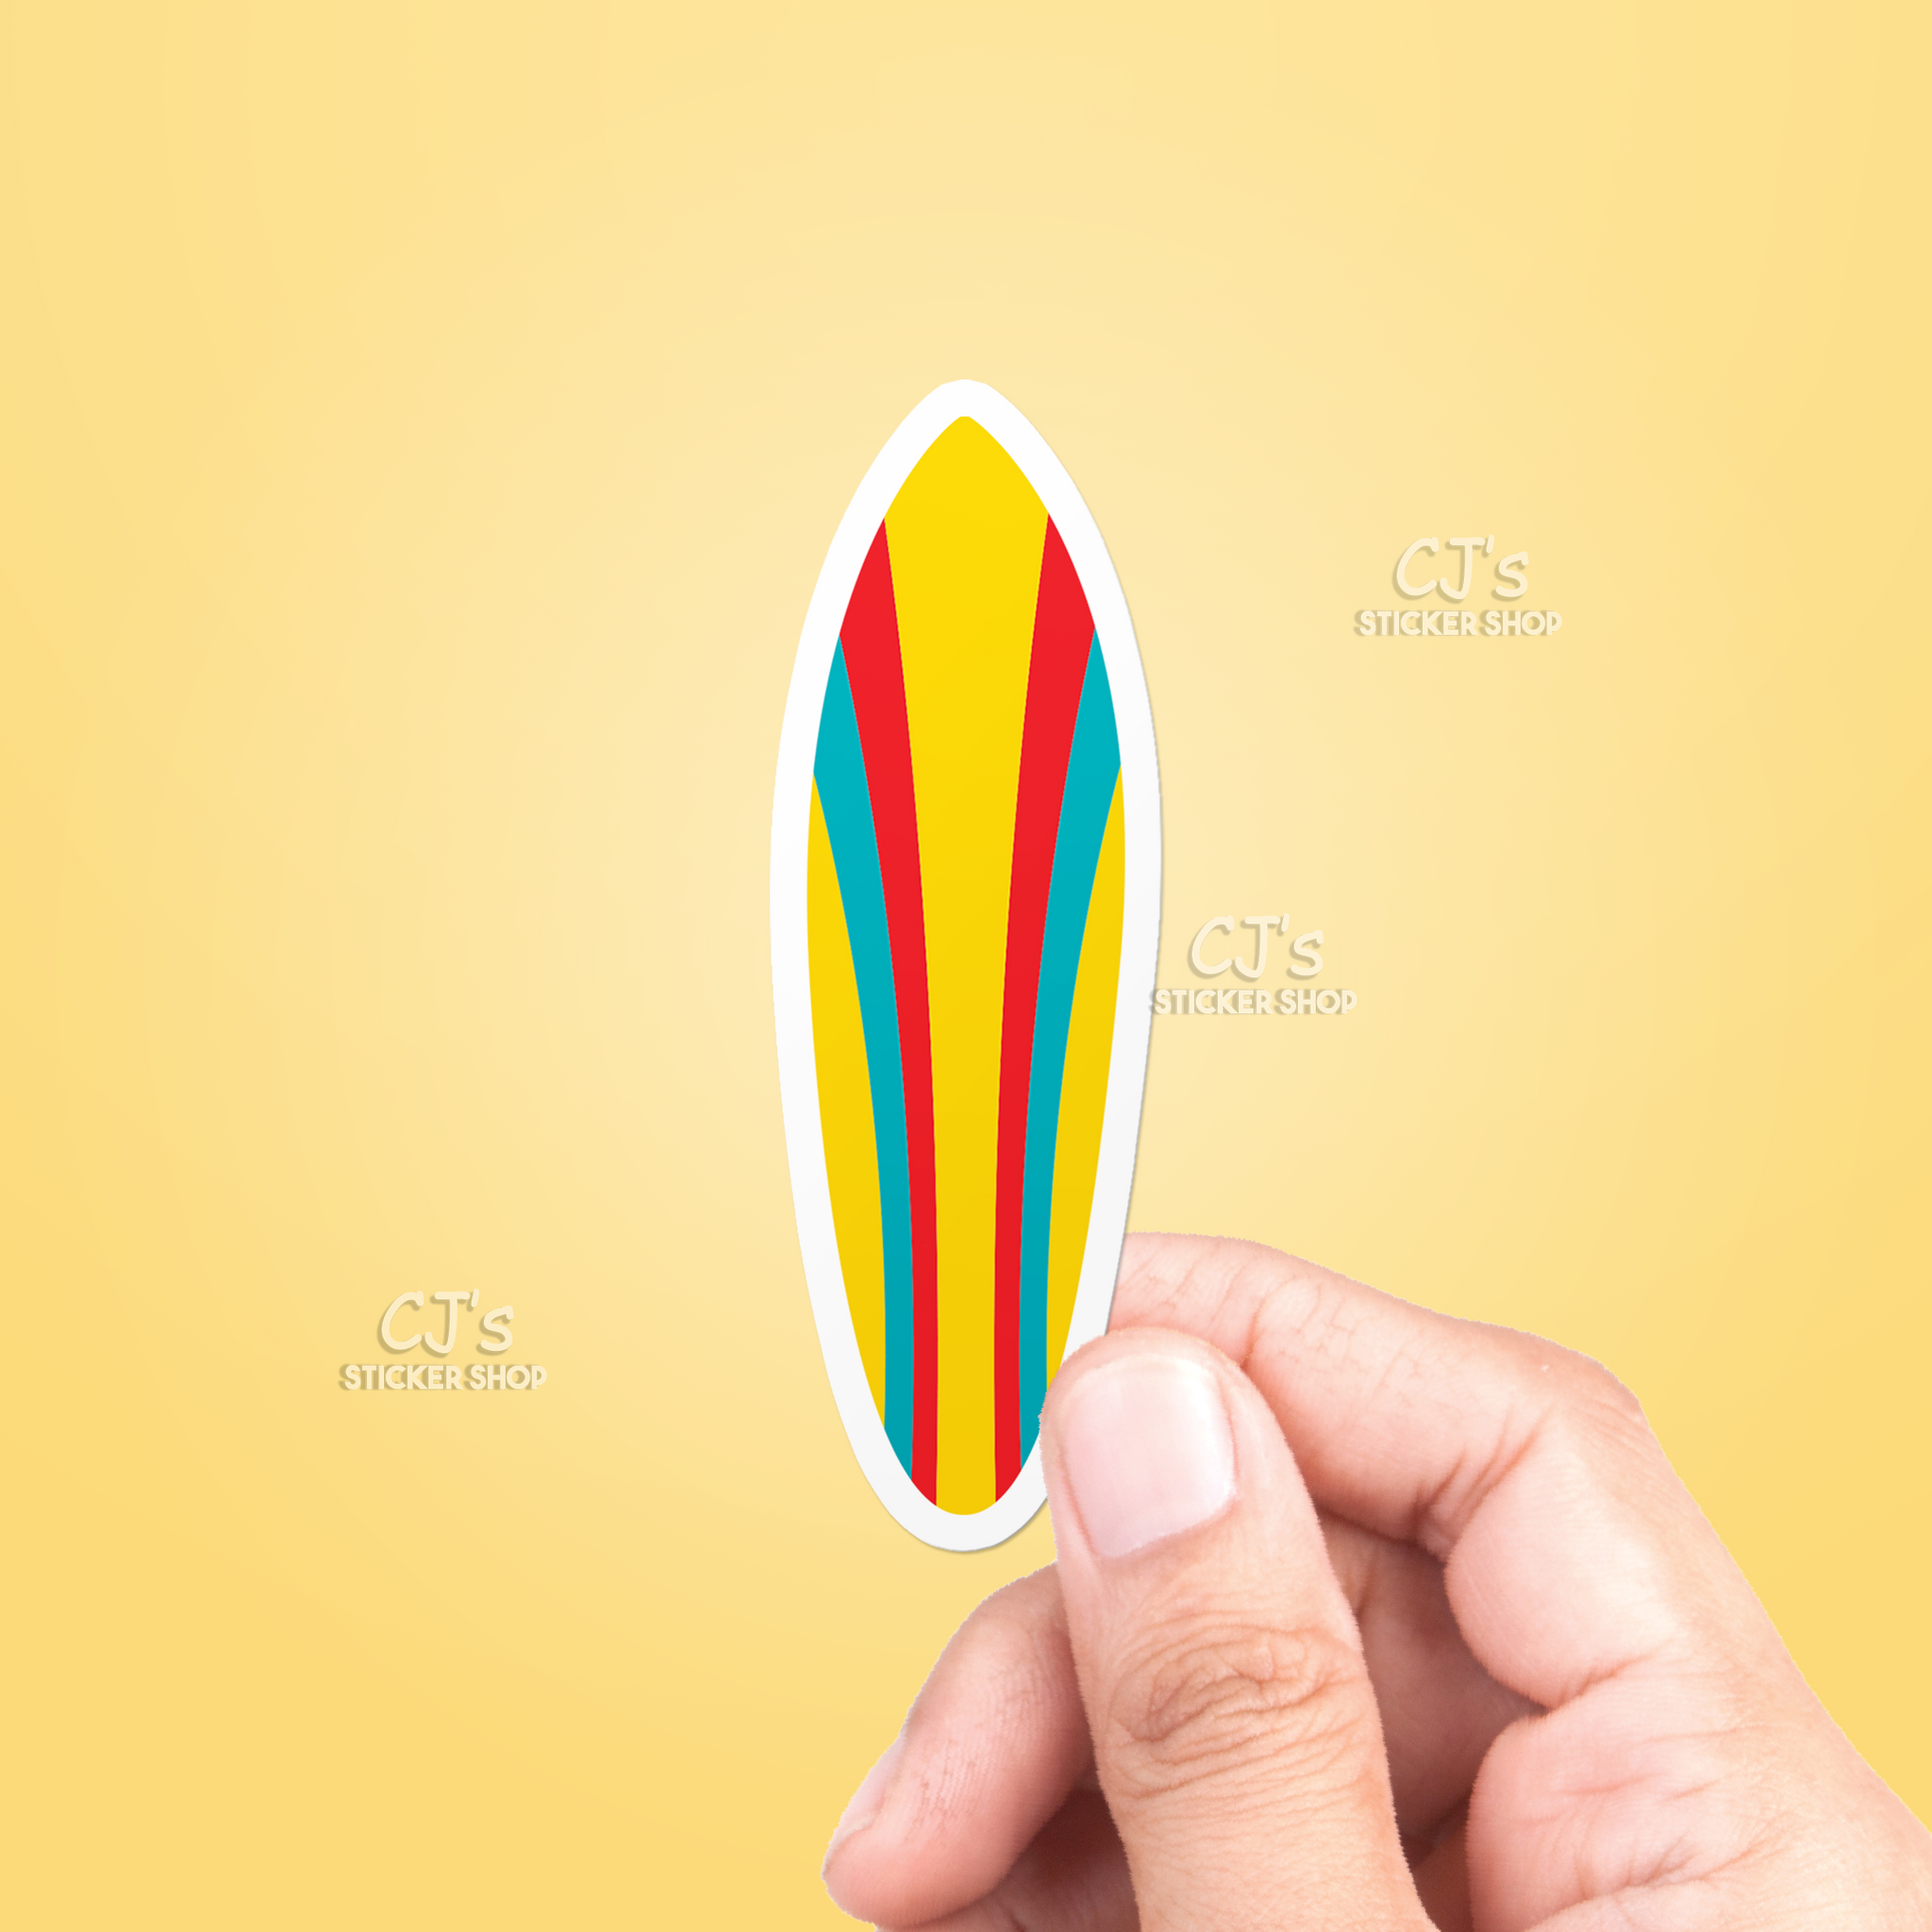 Surfboard Sticker